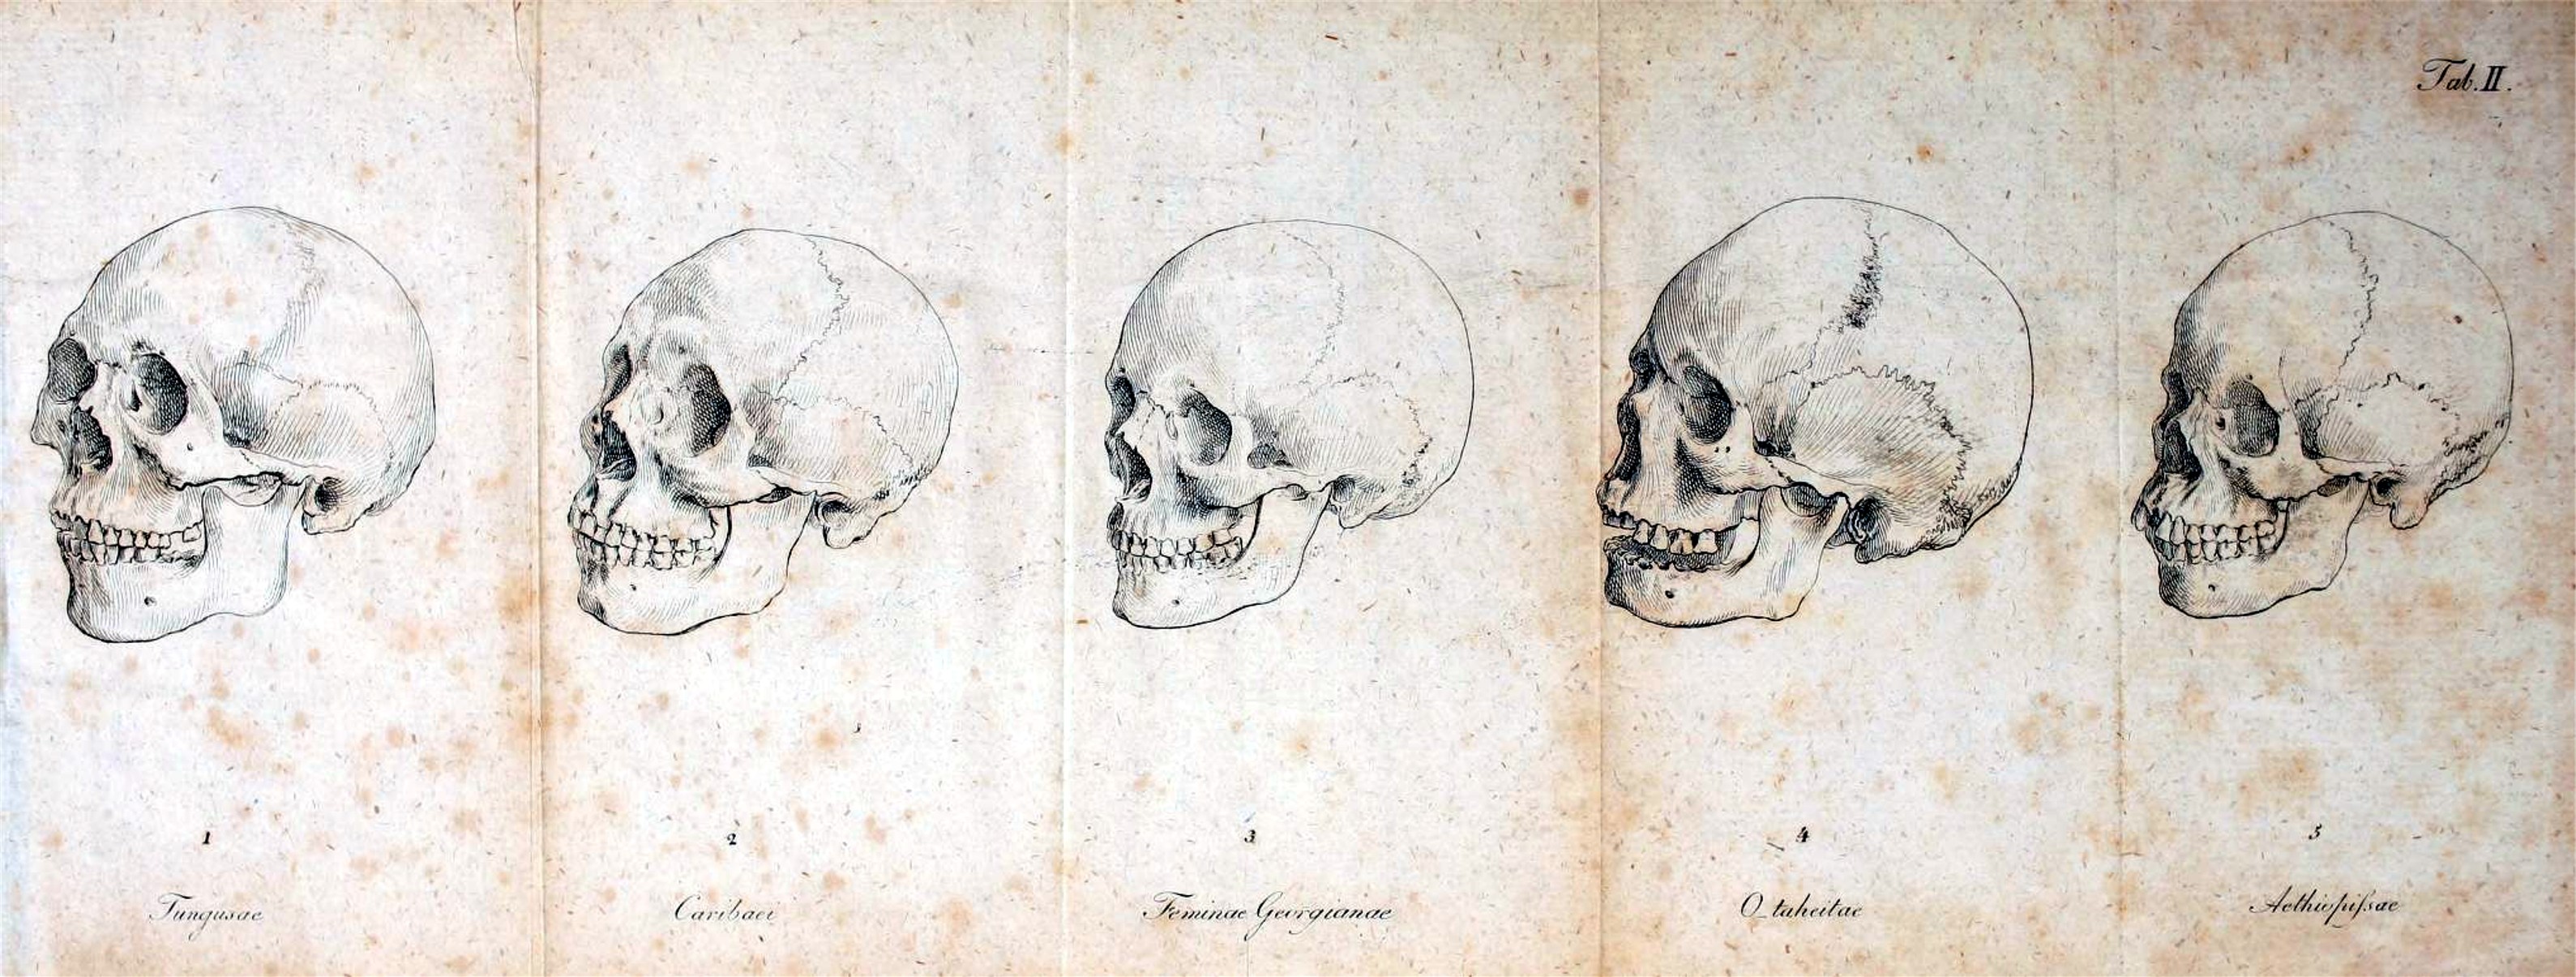 Human Anatomy Wallpaper Desktop Medical anatomy skull 2